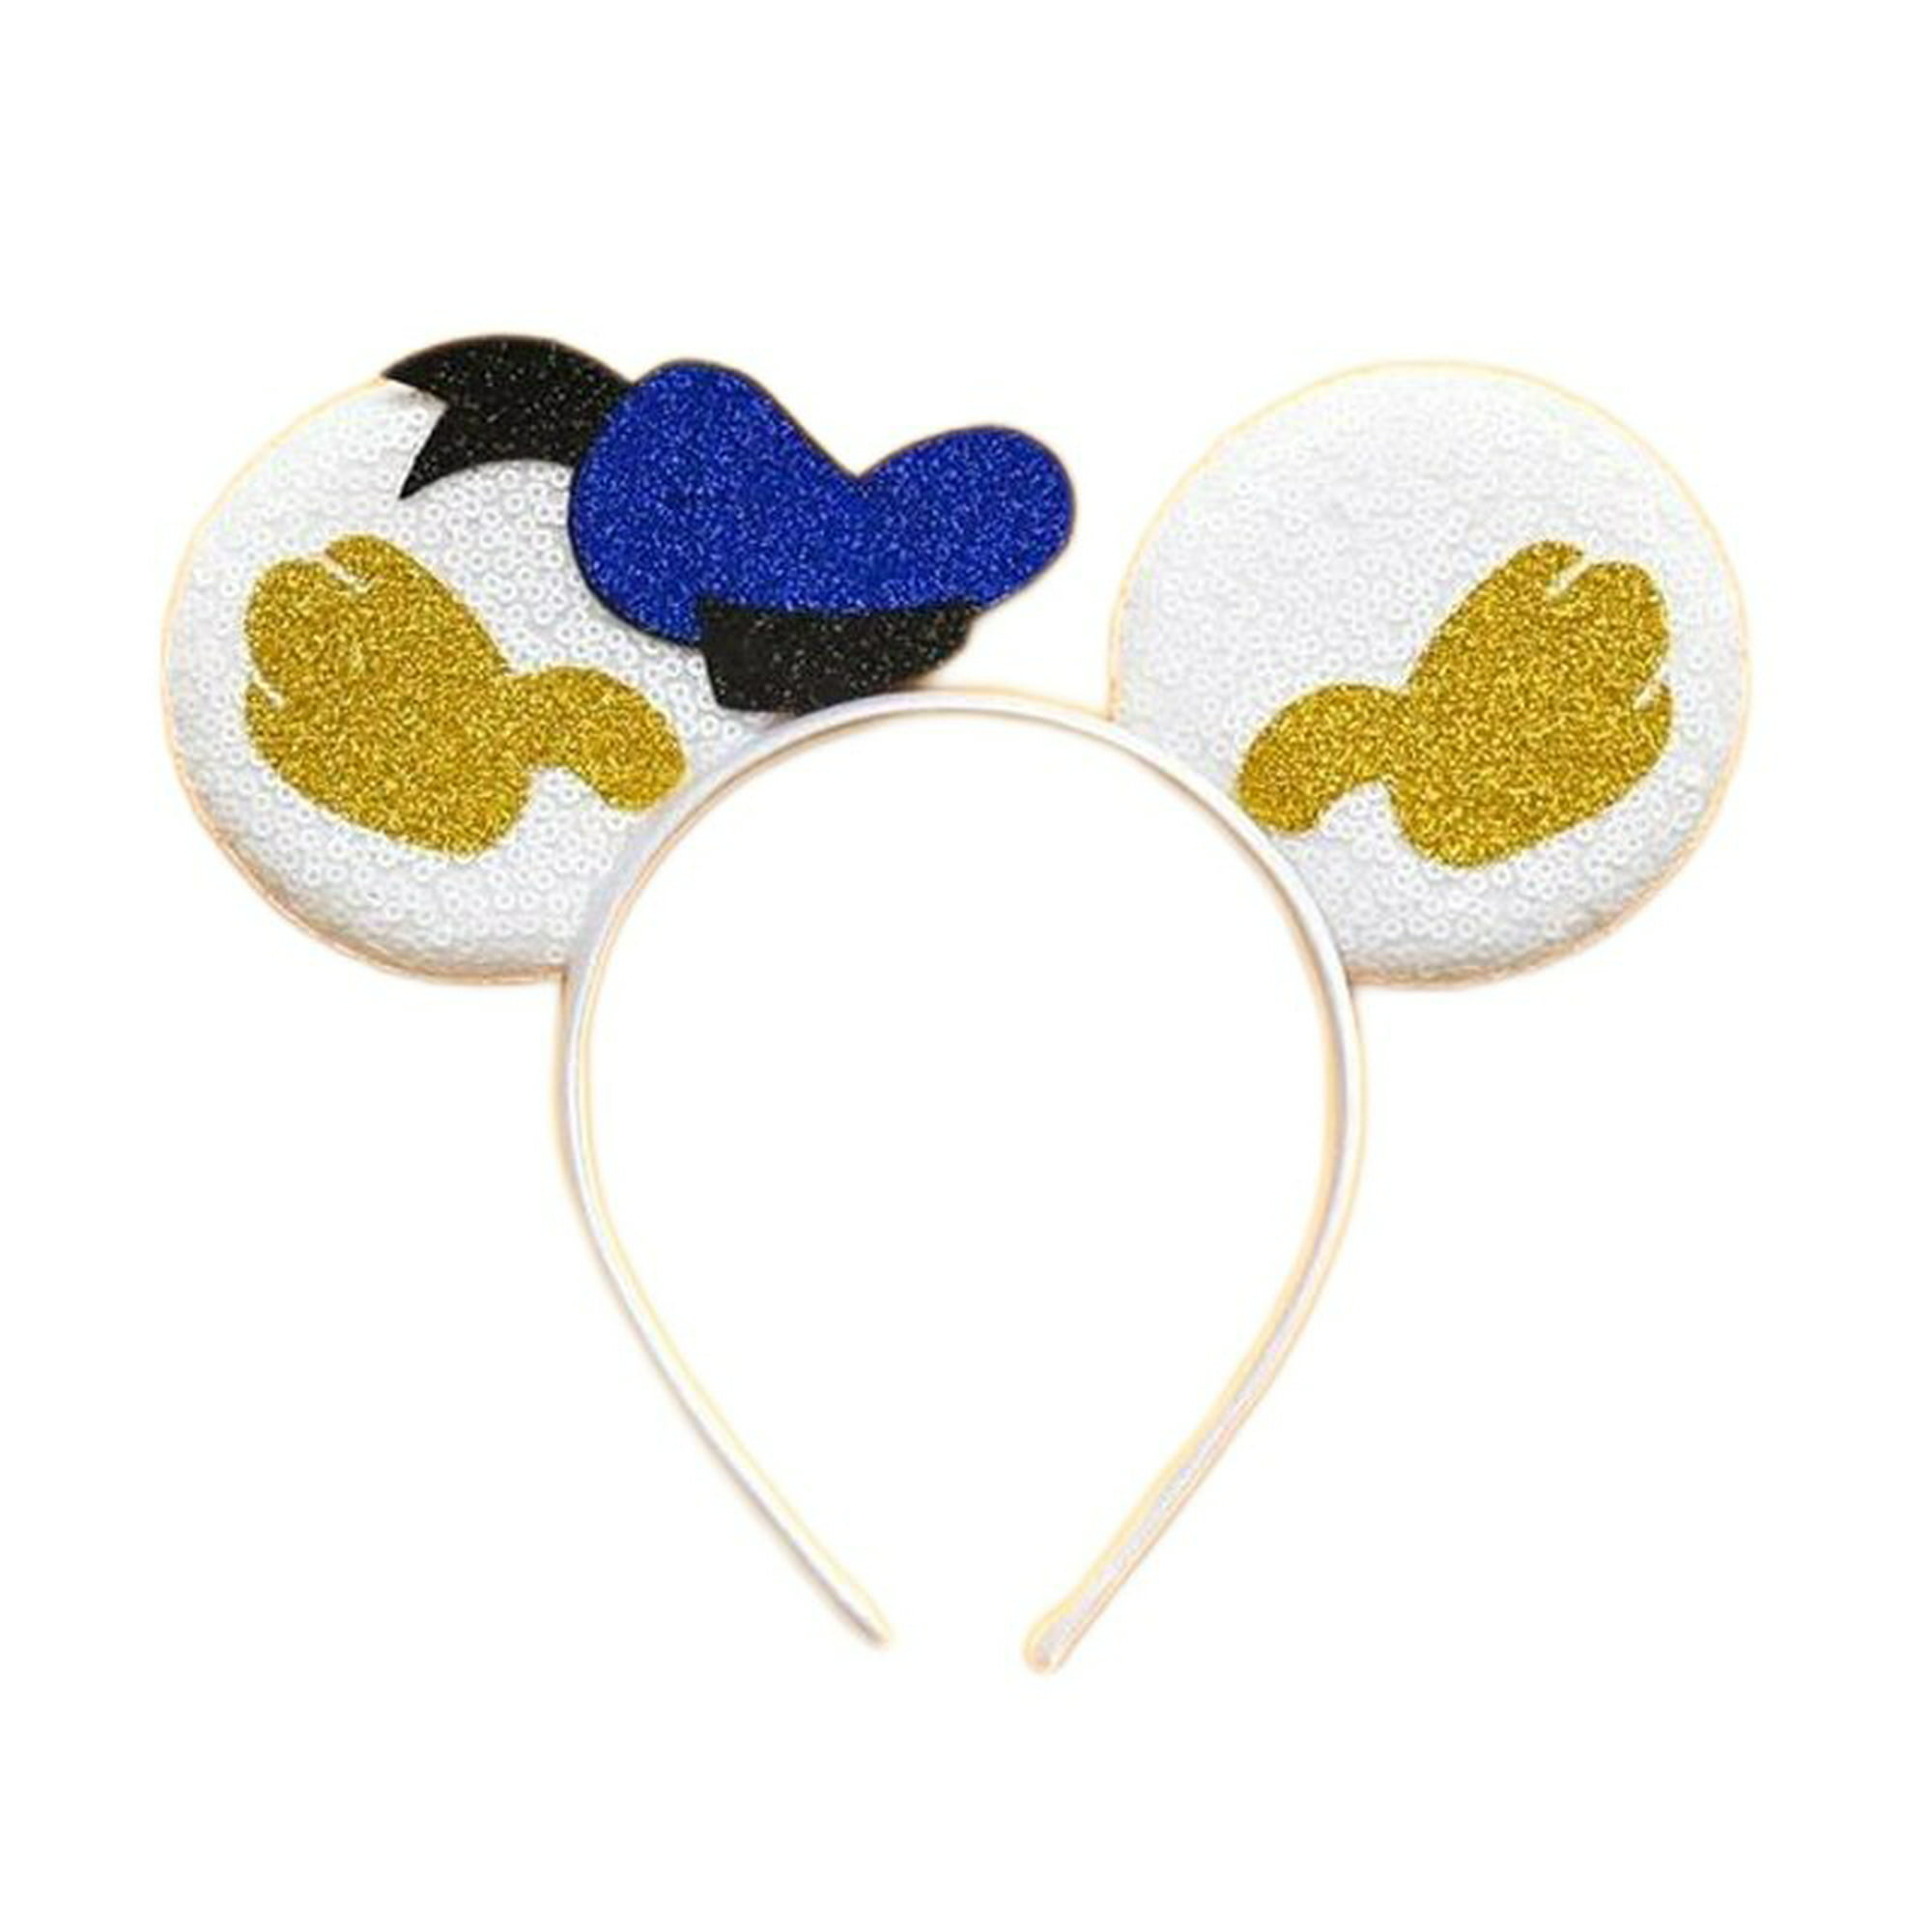 Disney Navidad Accesorios Para El Cabello Para Niña Minnie Mouse Orejas  Diademas Adultos Niños Kawaii Lentejuelas Chica Fiesta Diadema